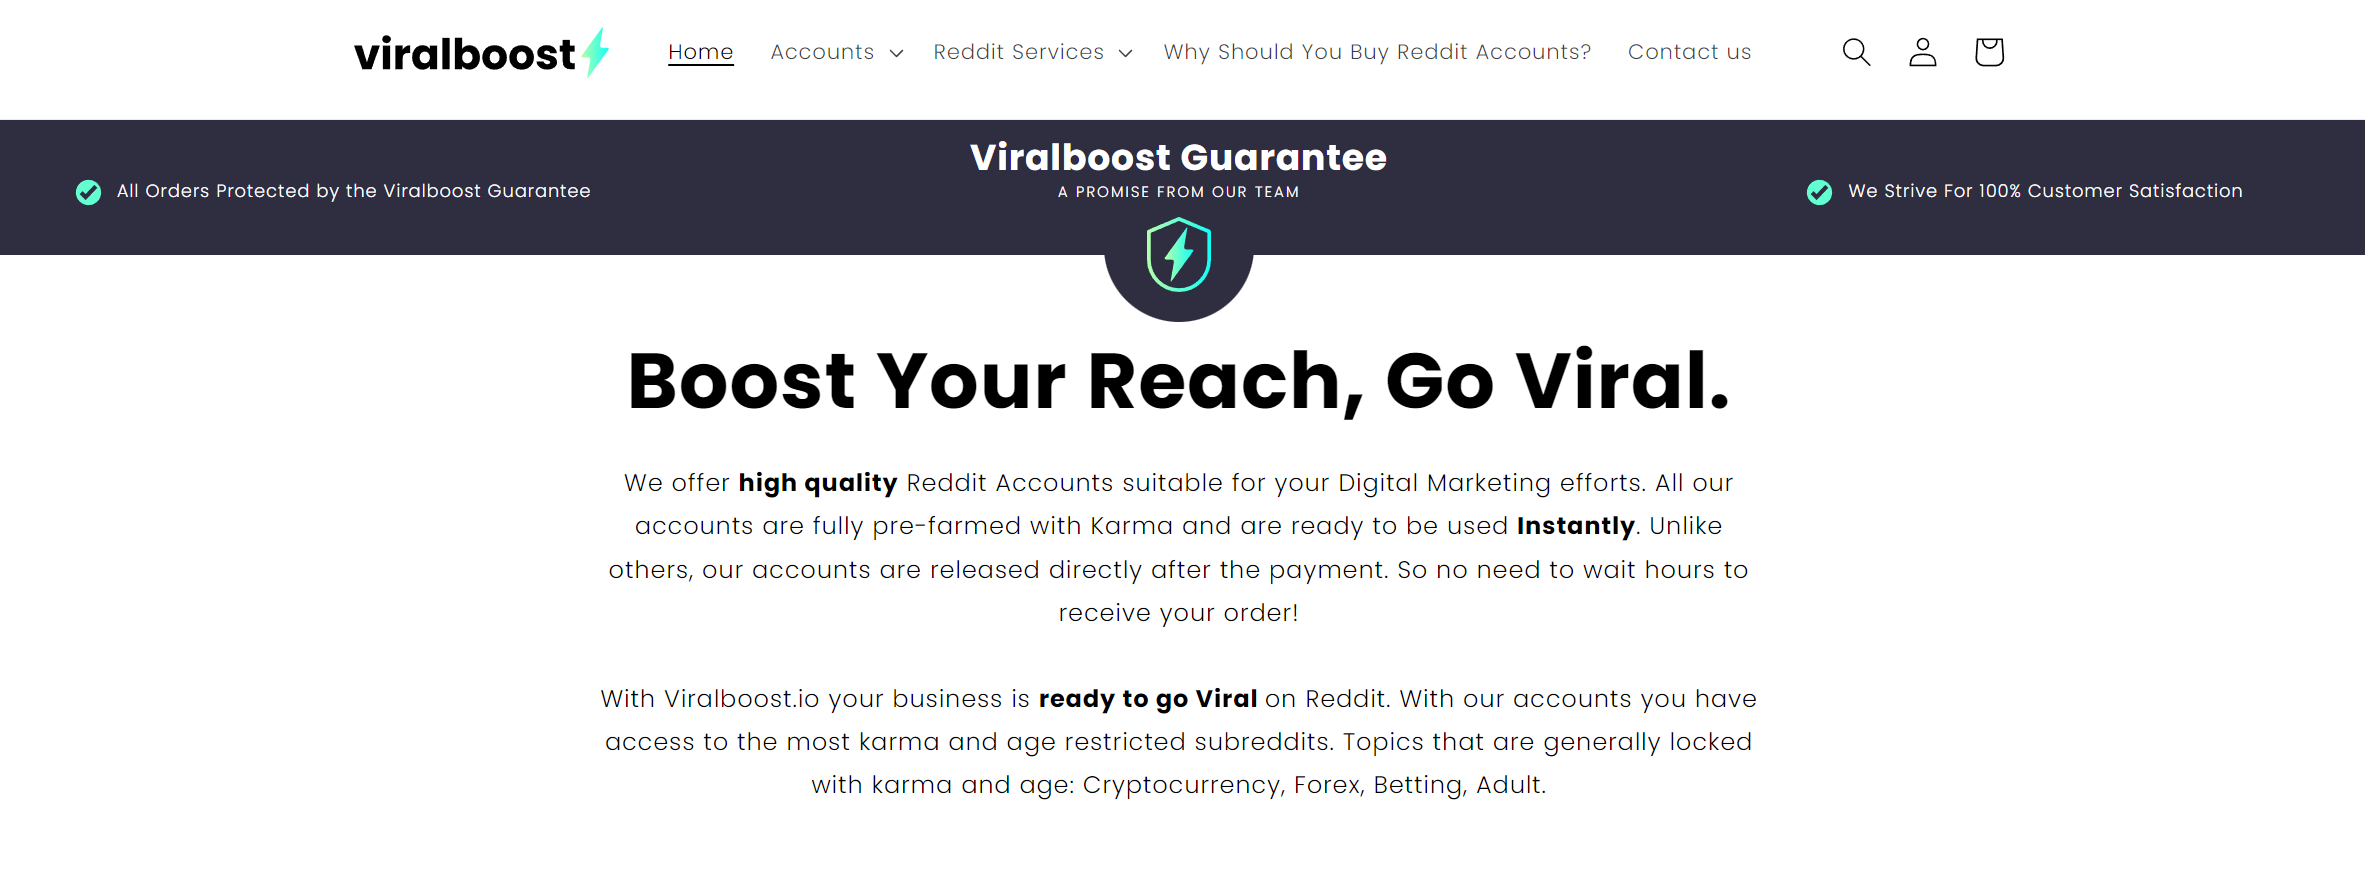 #1 reddit account seller - Viralboost.io